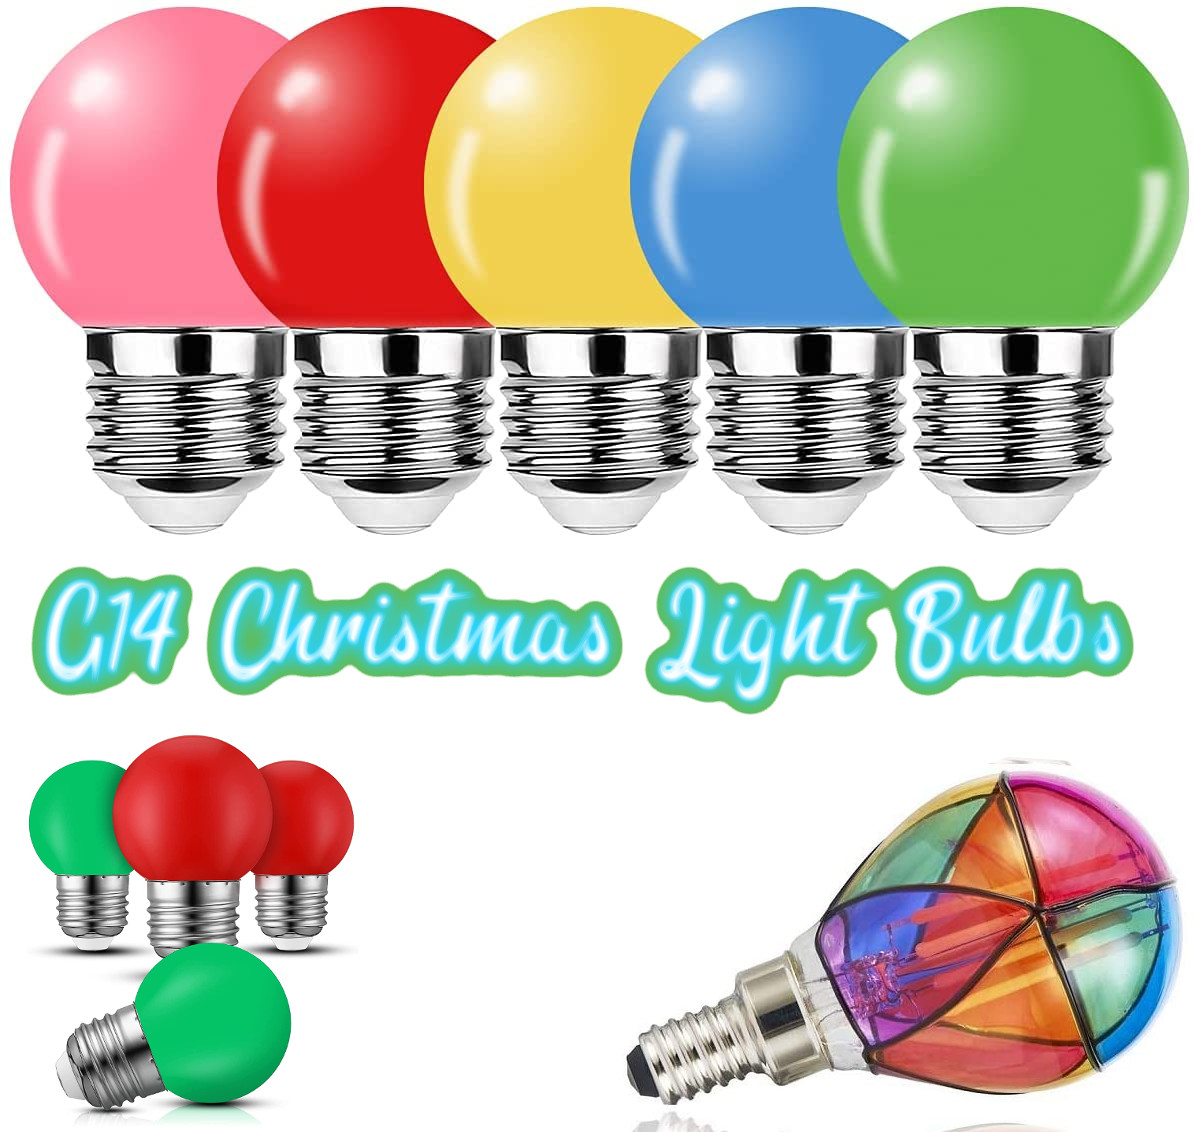 G14 Christmas Replacement Light Bulbs